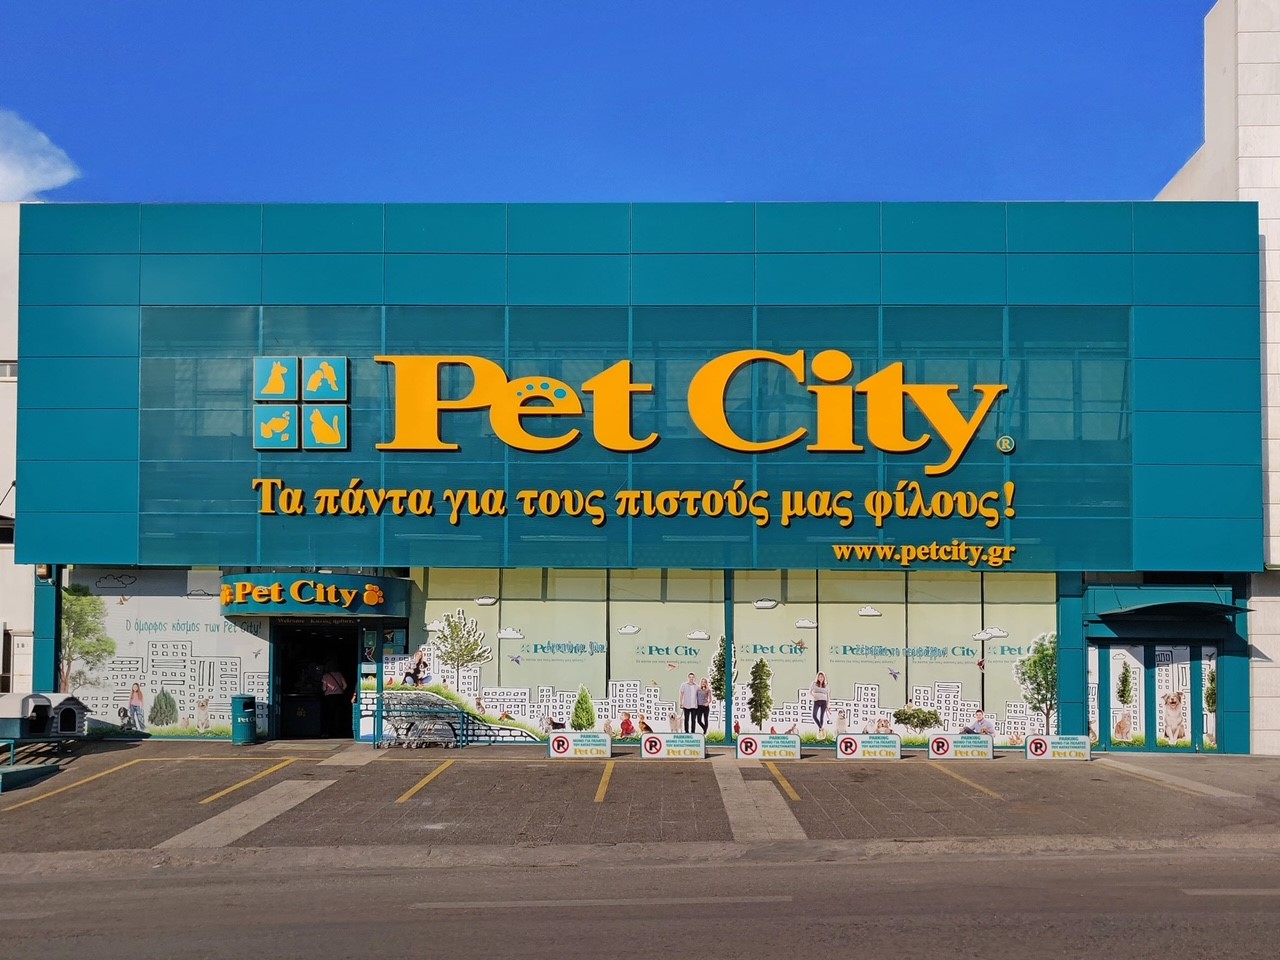 Pet City – Πώς ο Μαντζουράνης Μαντζουρανάκης και η οικογένειά του έγιναν willing sellers